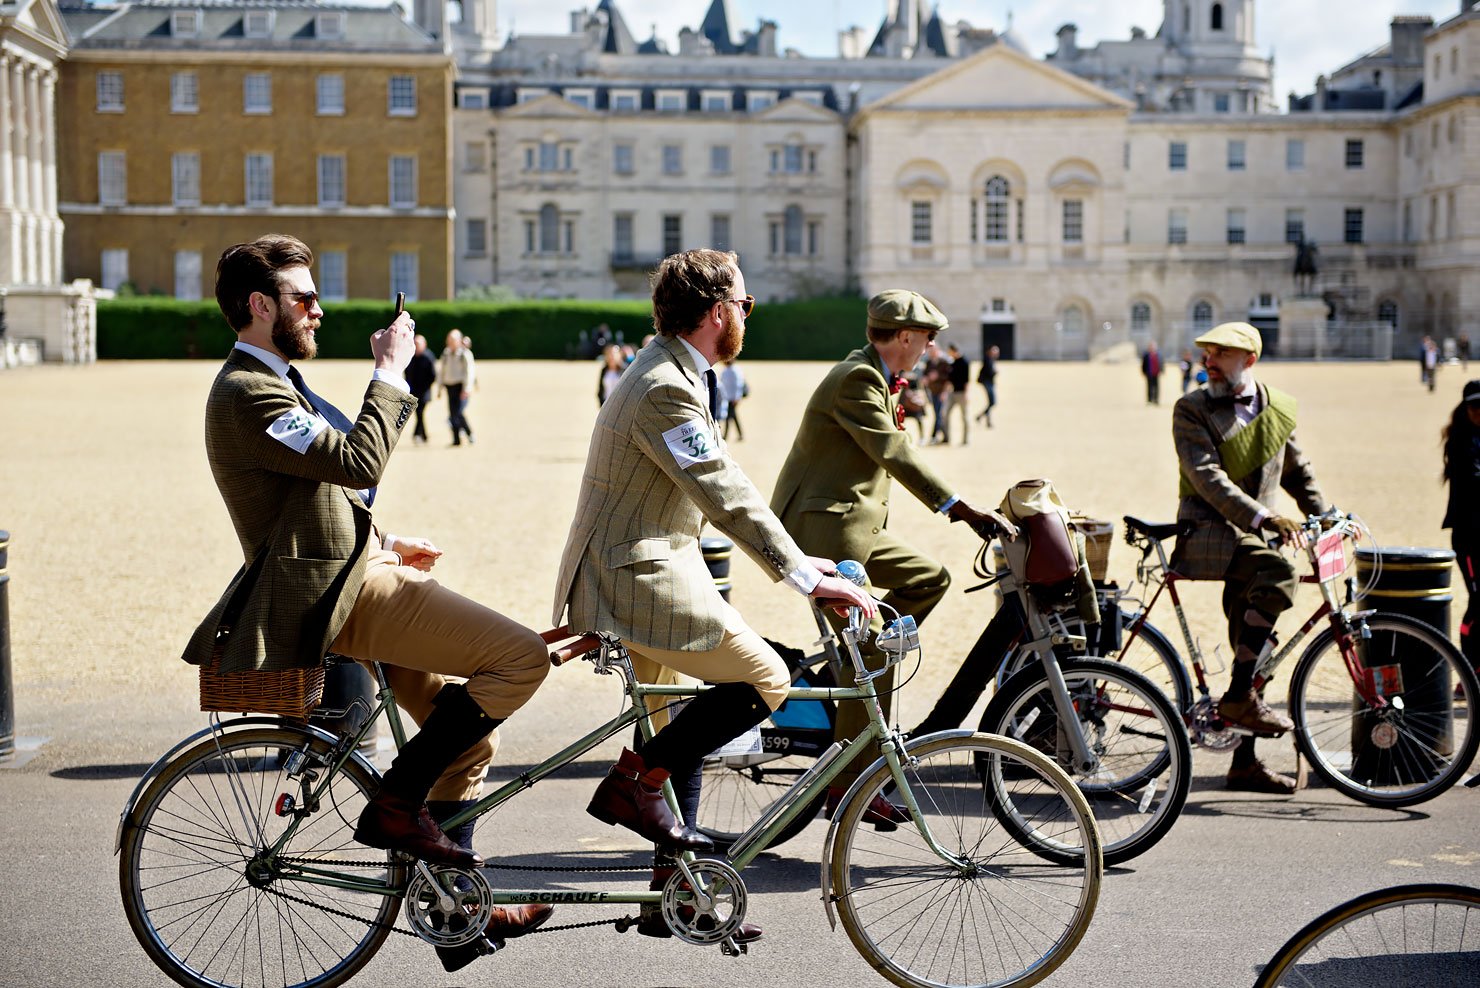 The Tweed Run London 2015: London's most stylish bike ride - Men on a tandem bike